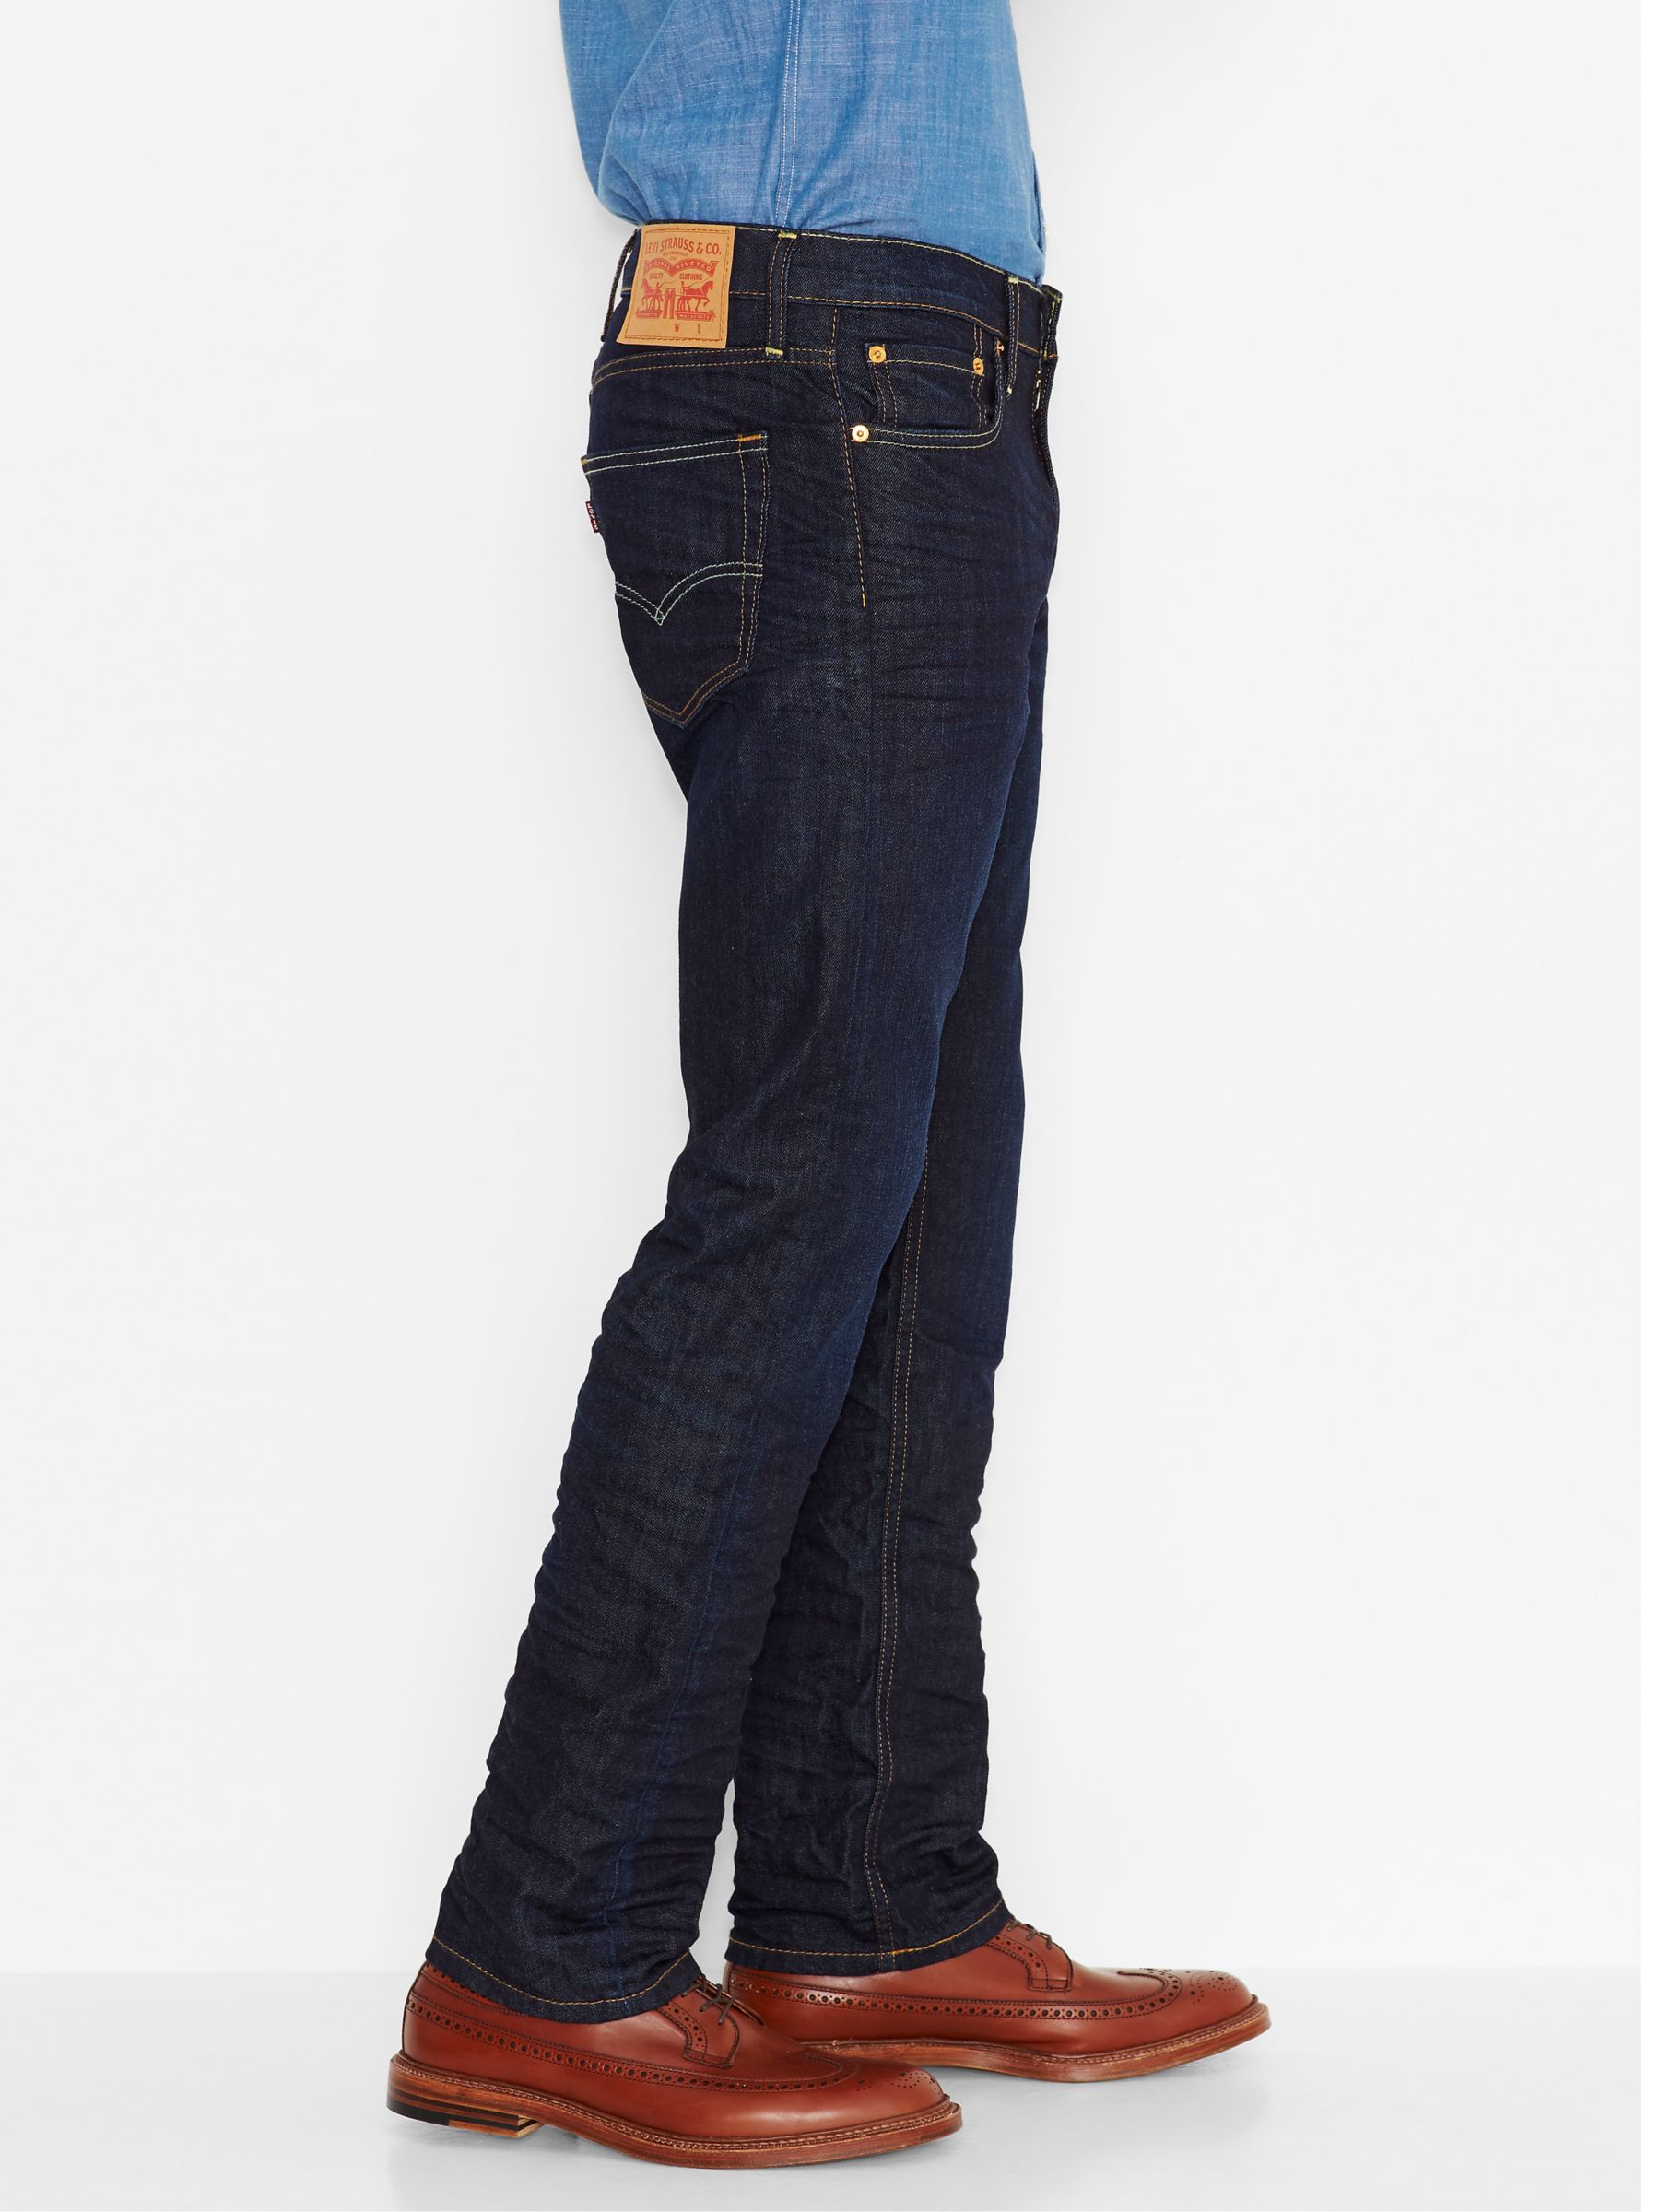 Levi's 504 Regular Straight Jeans, The 